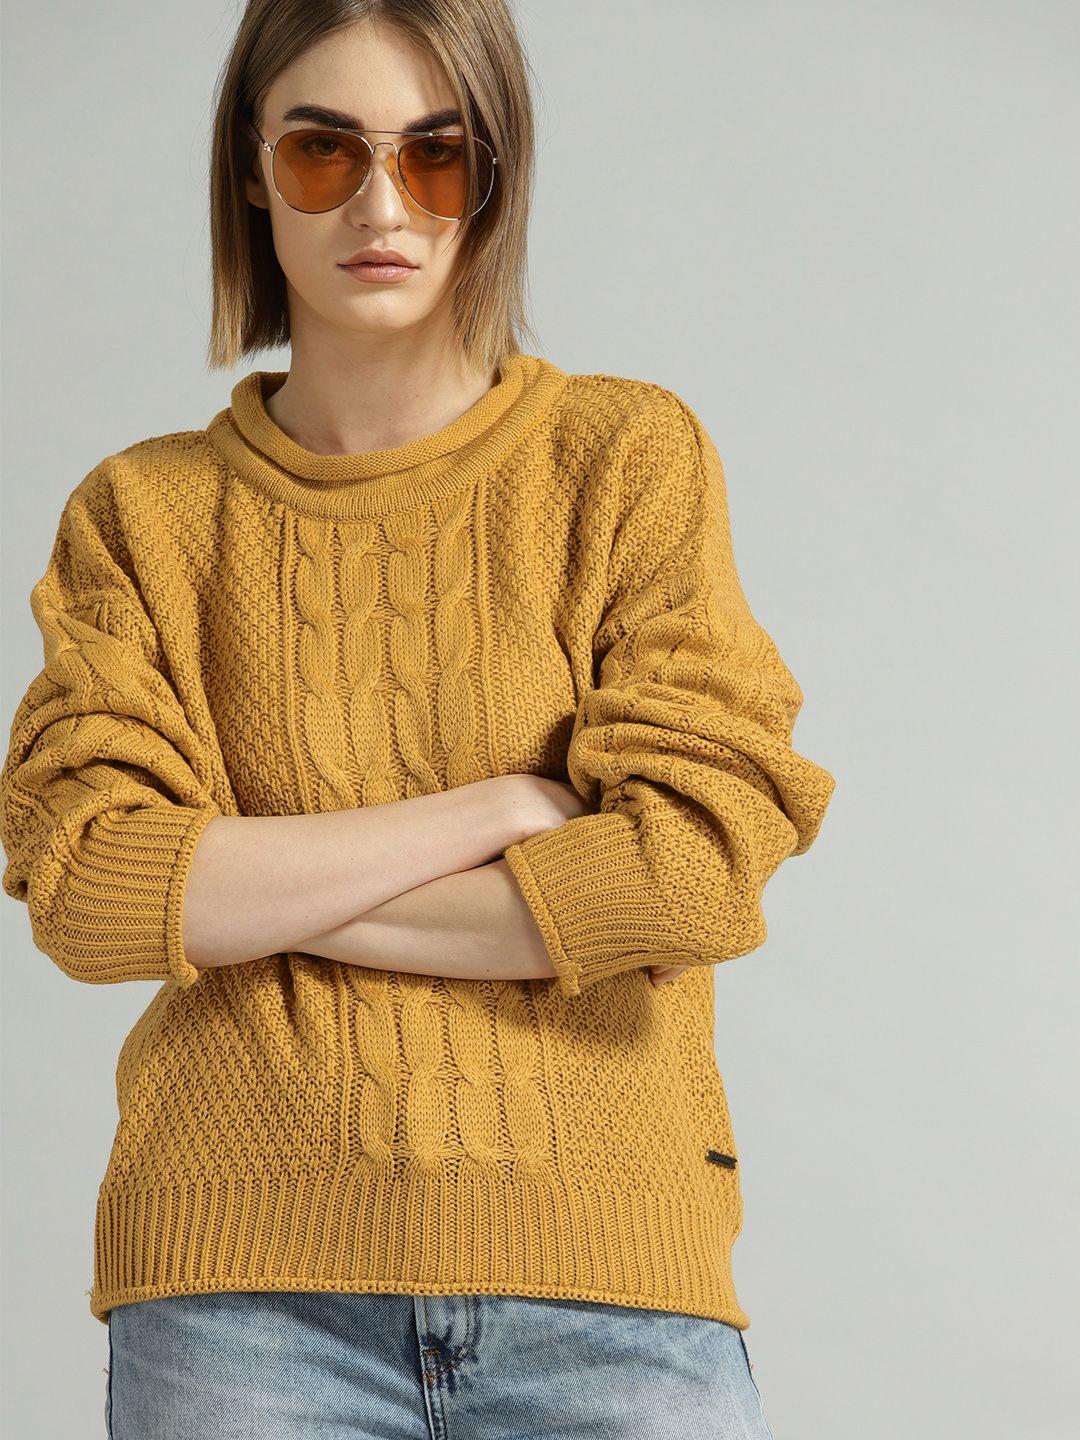 the roadster lifestyle co women mustard yellow self design sweater